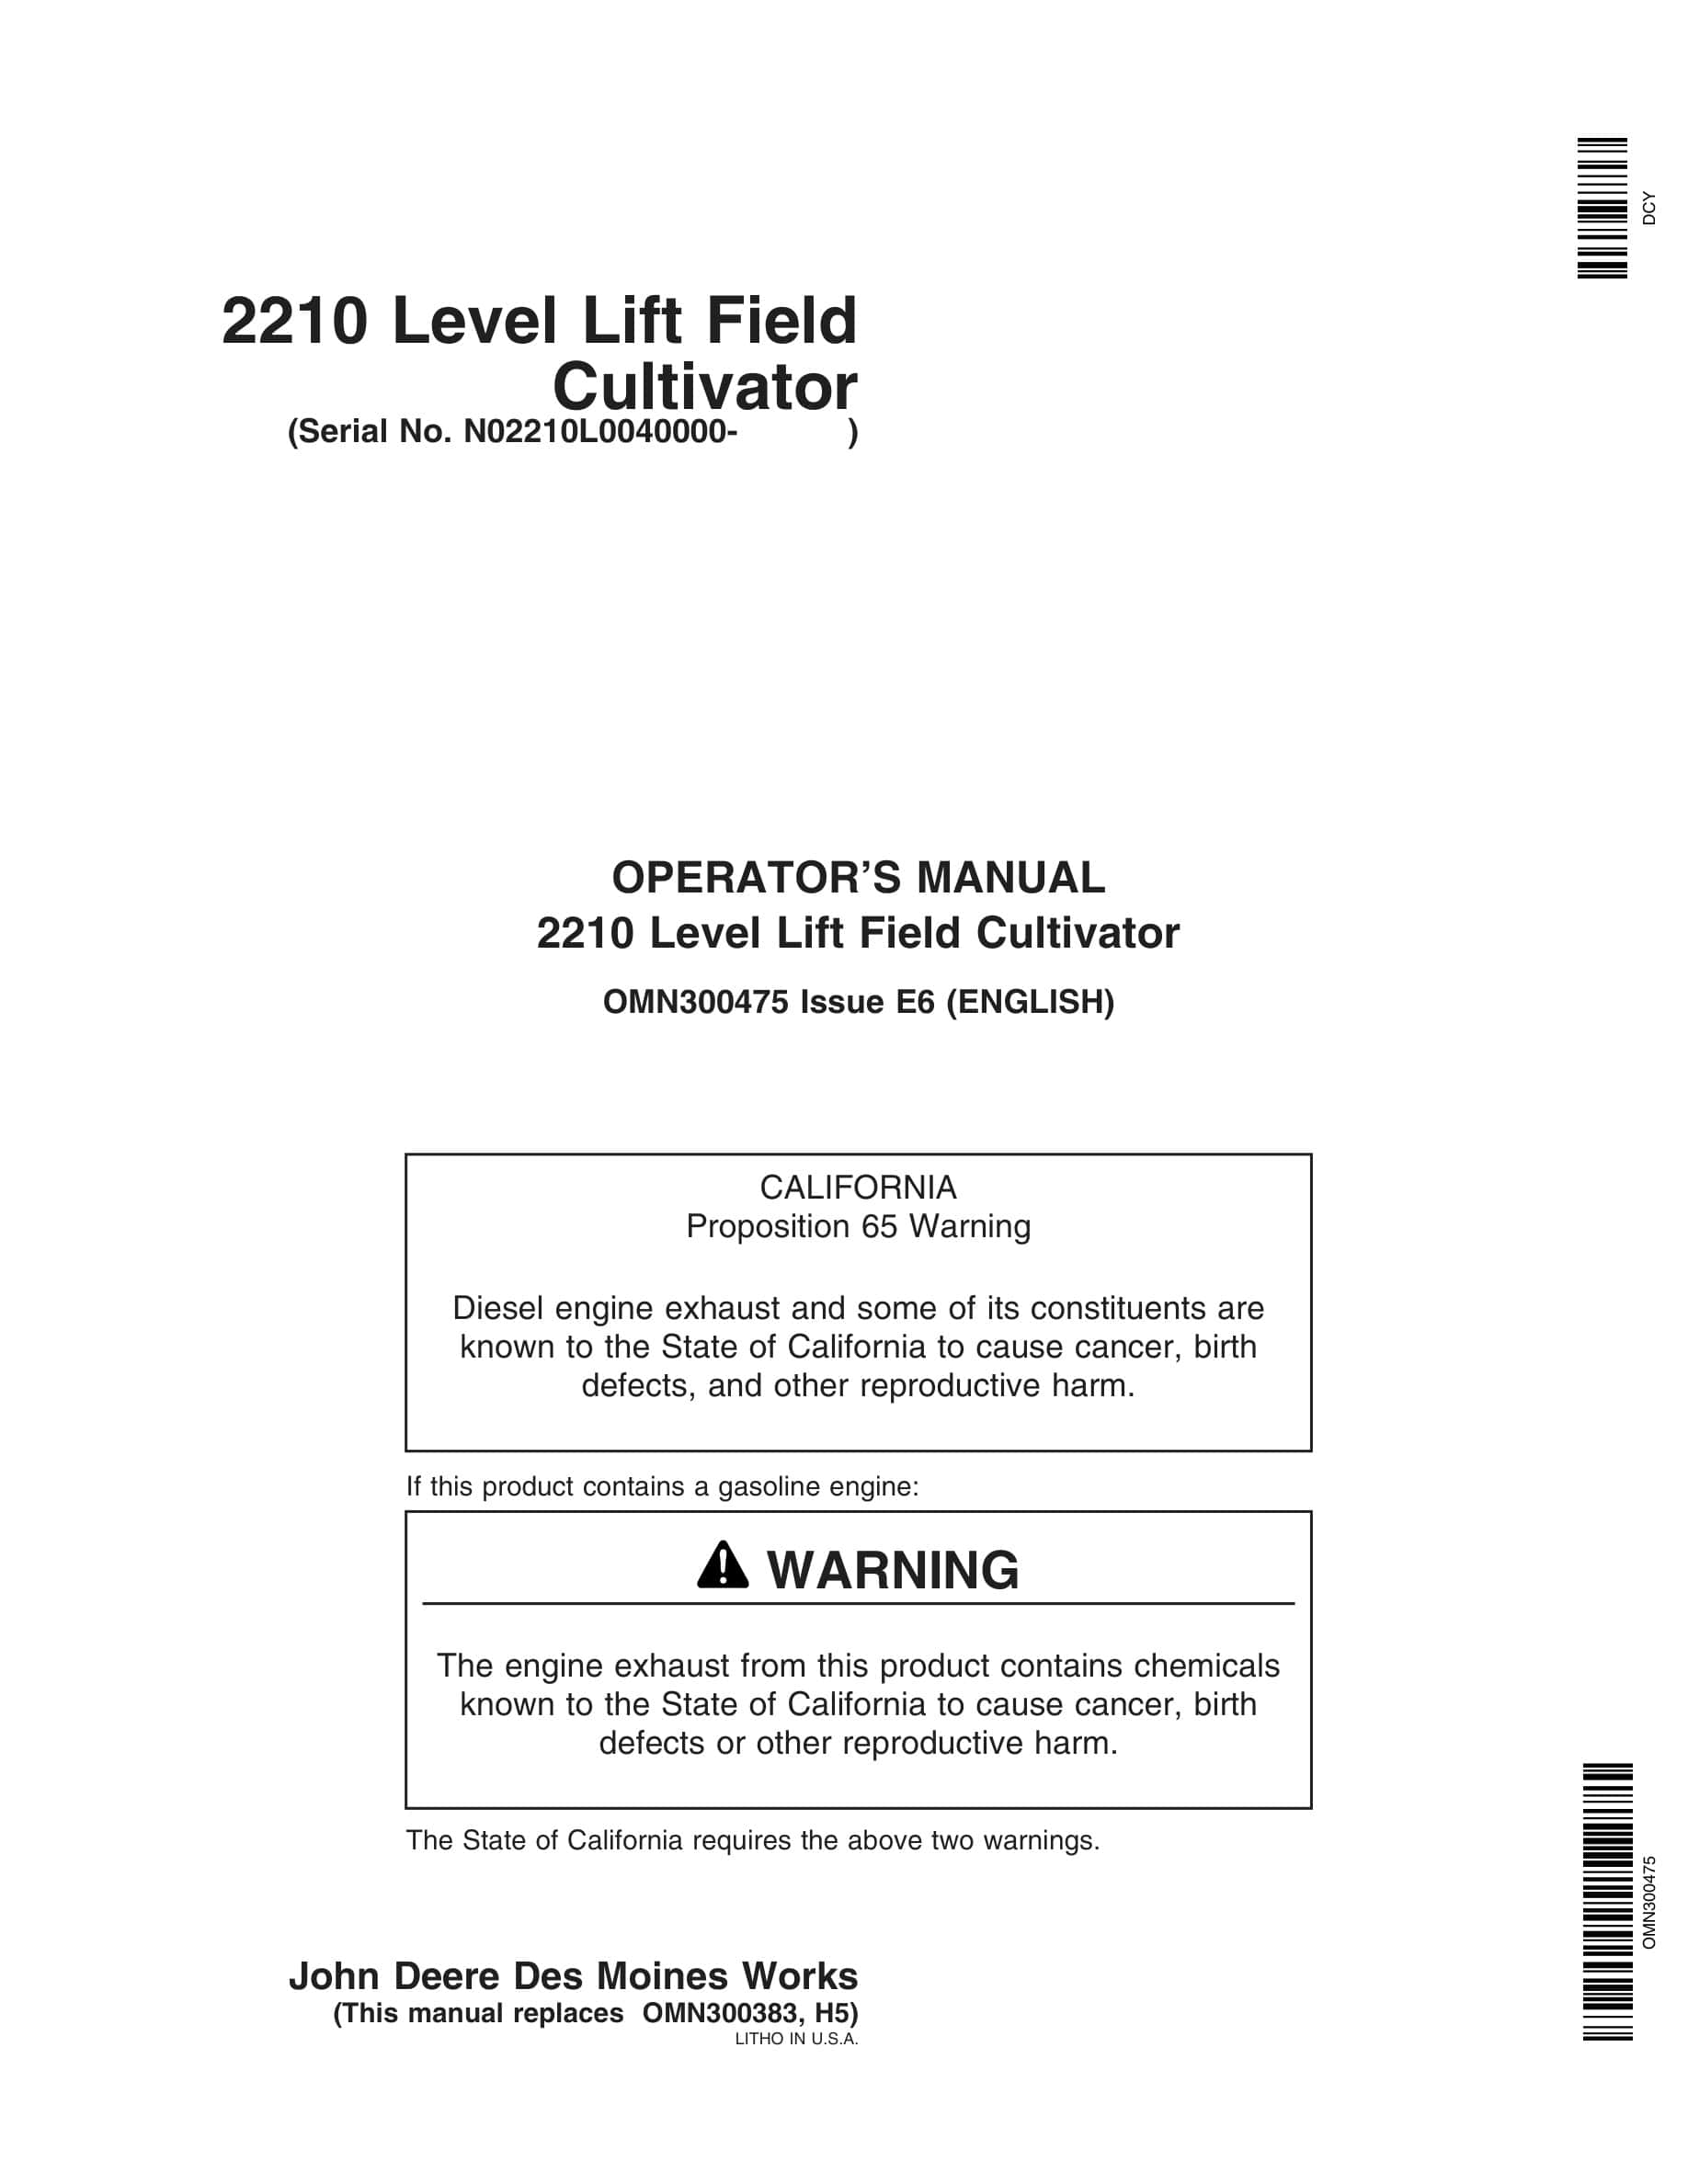 John Deere 2210 Level Lift Field Cultivator Operator Manual OMN300475-1